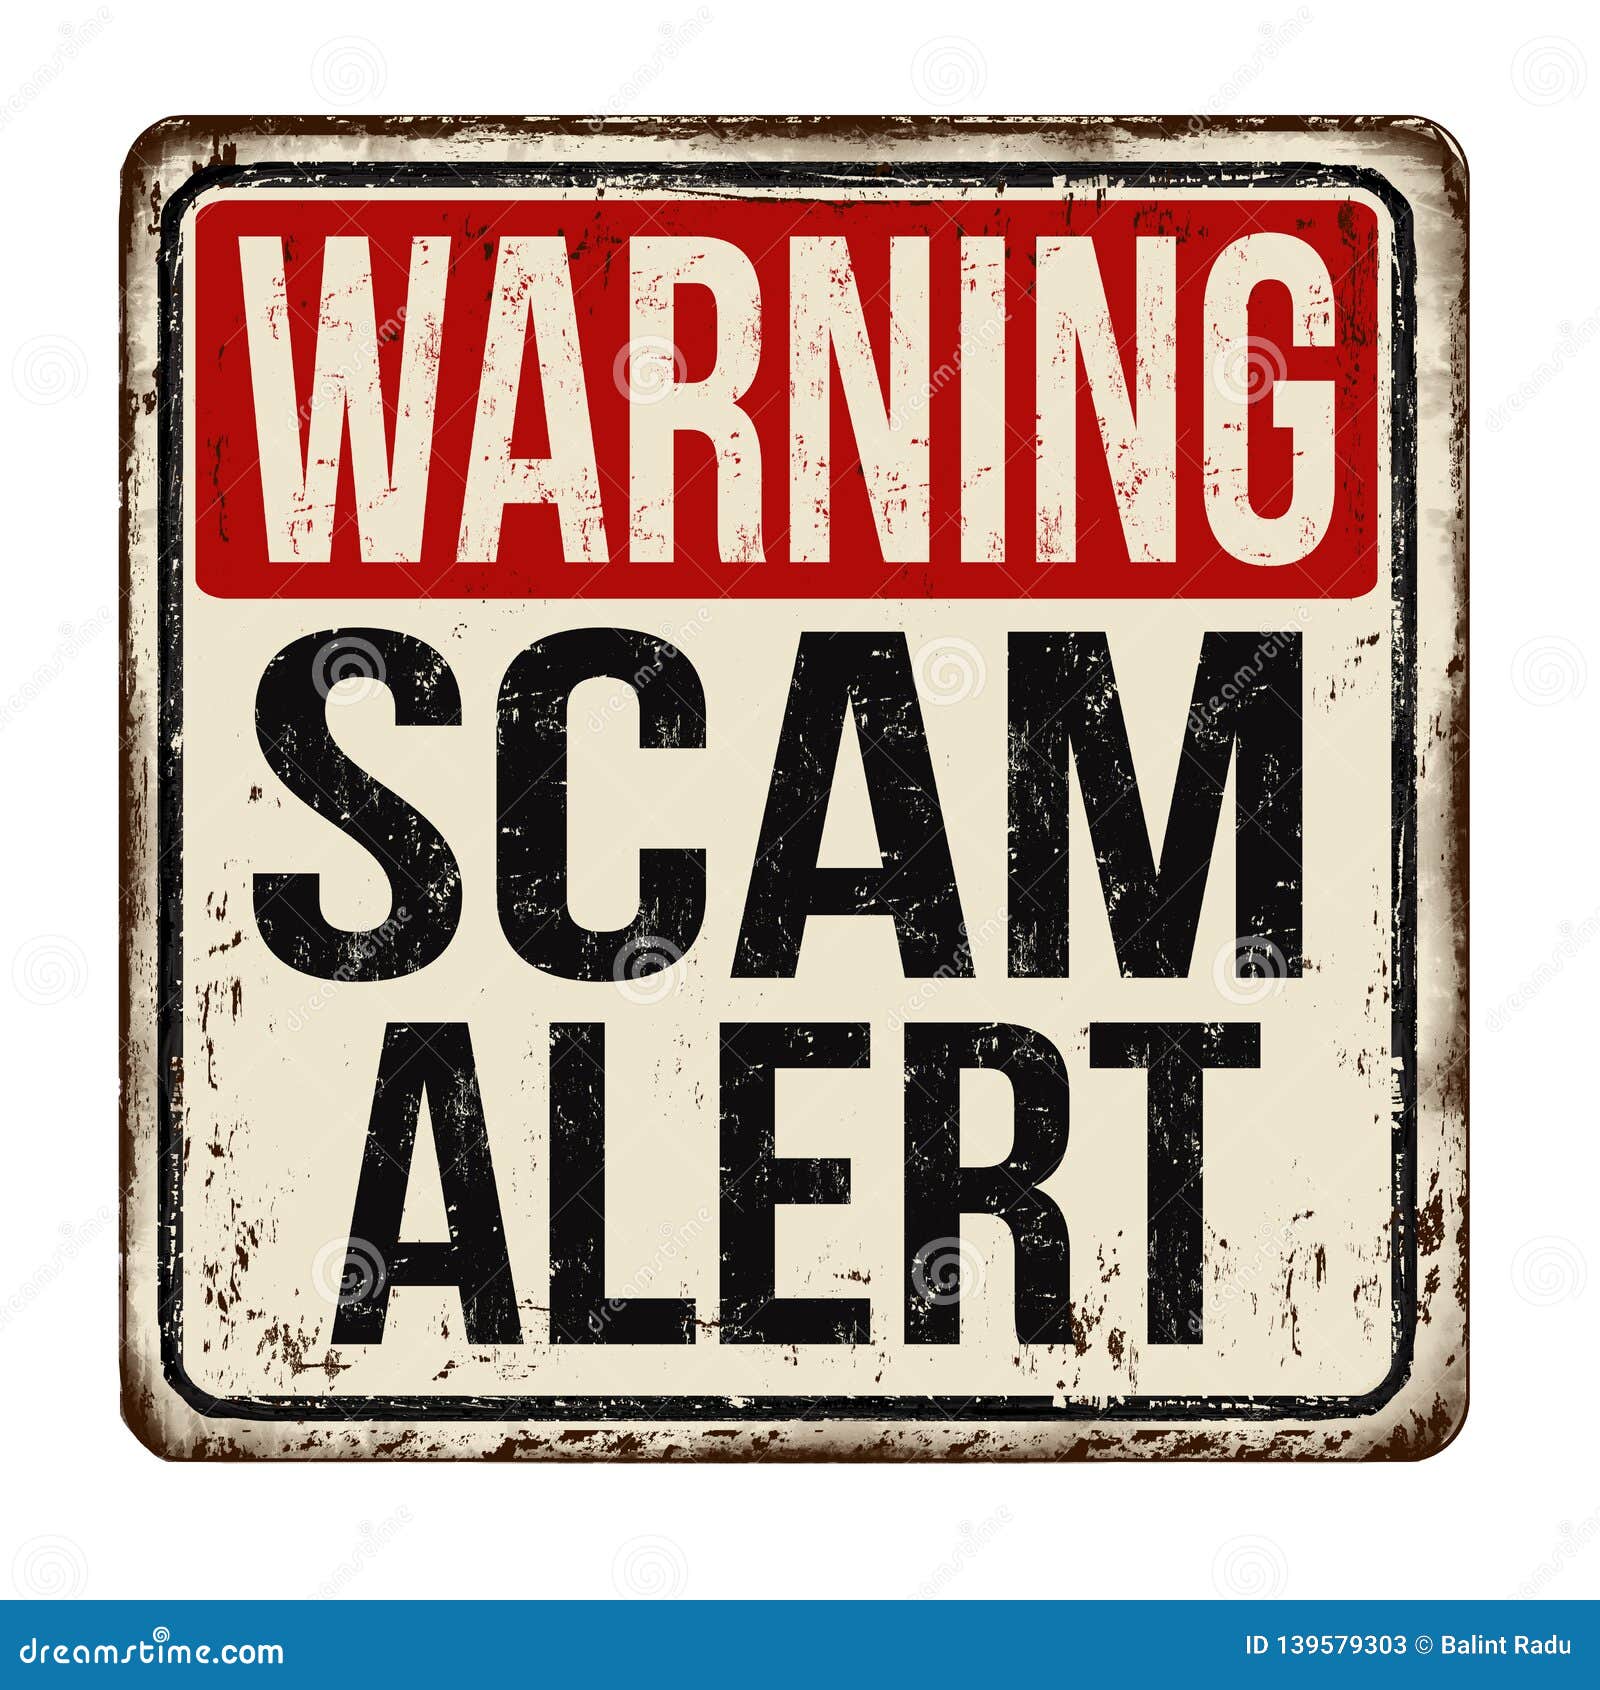 warning scam alert vintage rusty metal sign